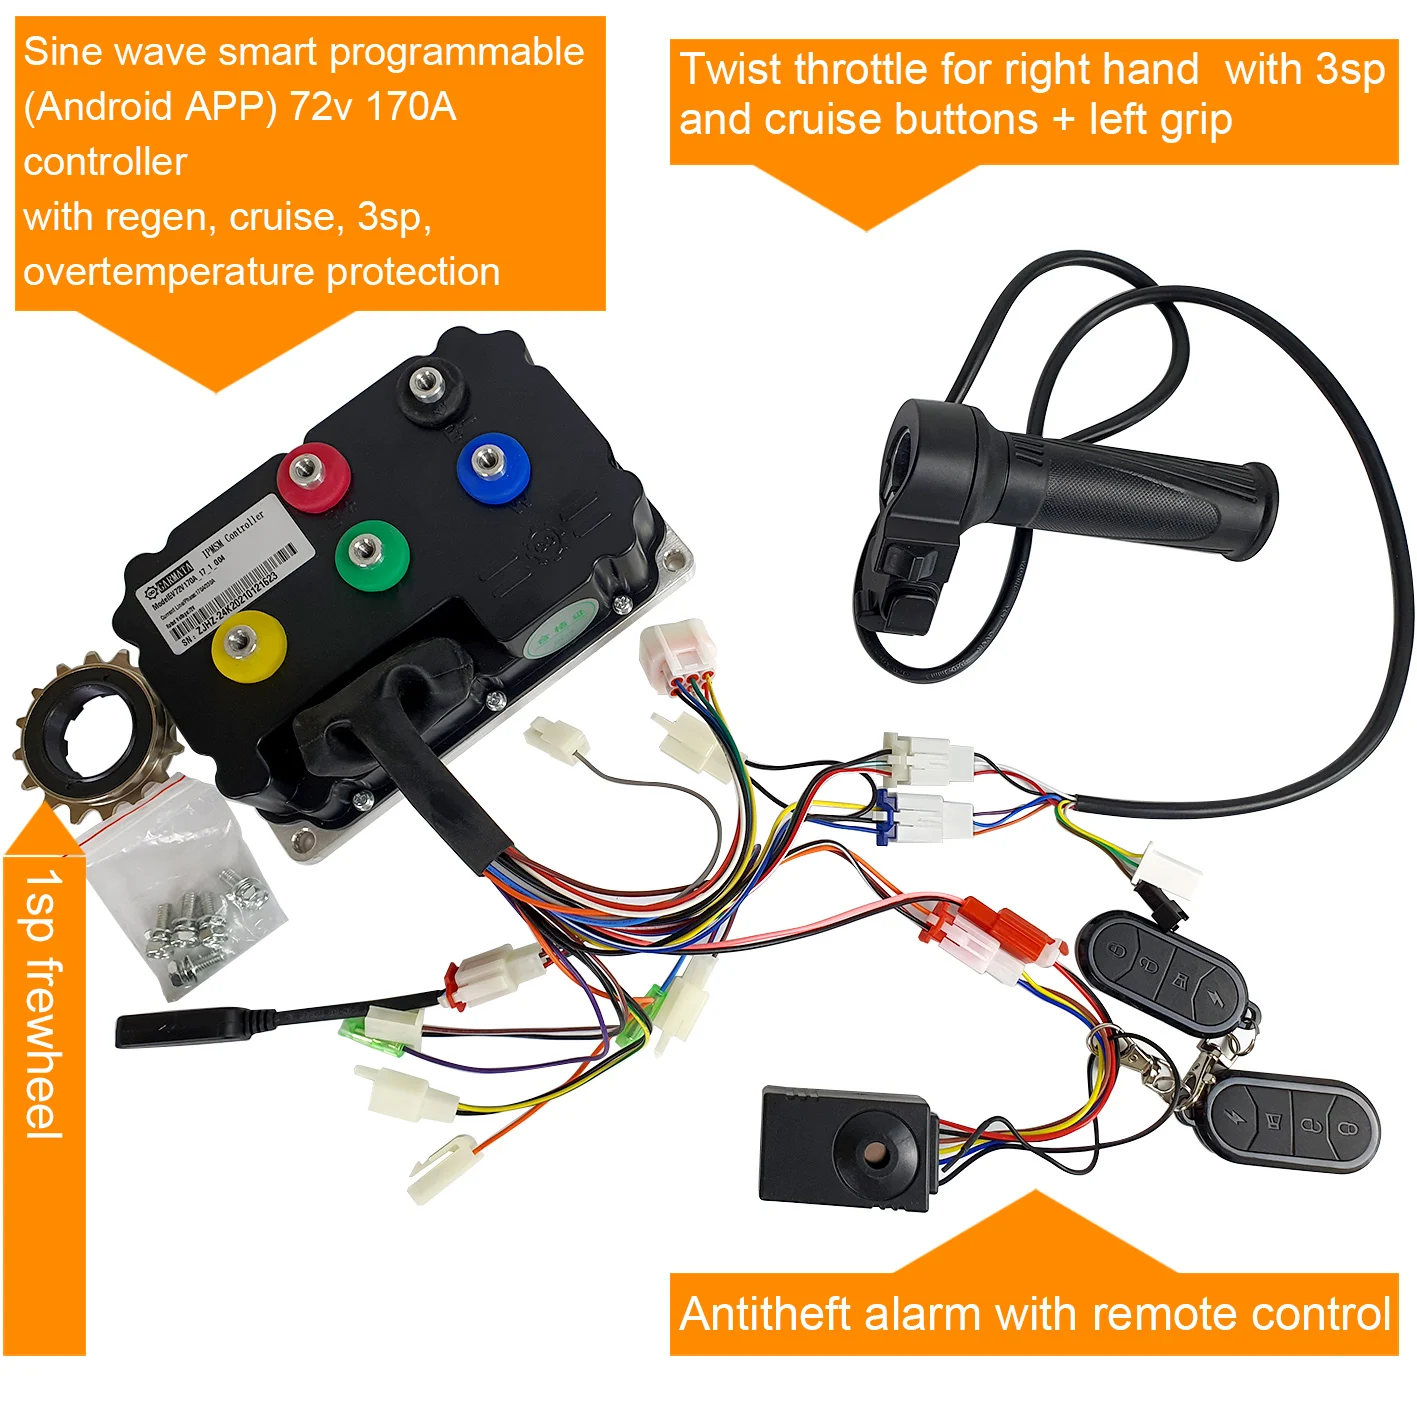 Ebike Programmable Sine Wave 48-72v Controller +Twist throttle+left grip+Antitheft alarm for Electric Bicycle